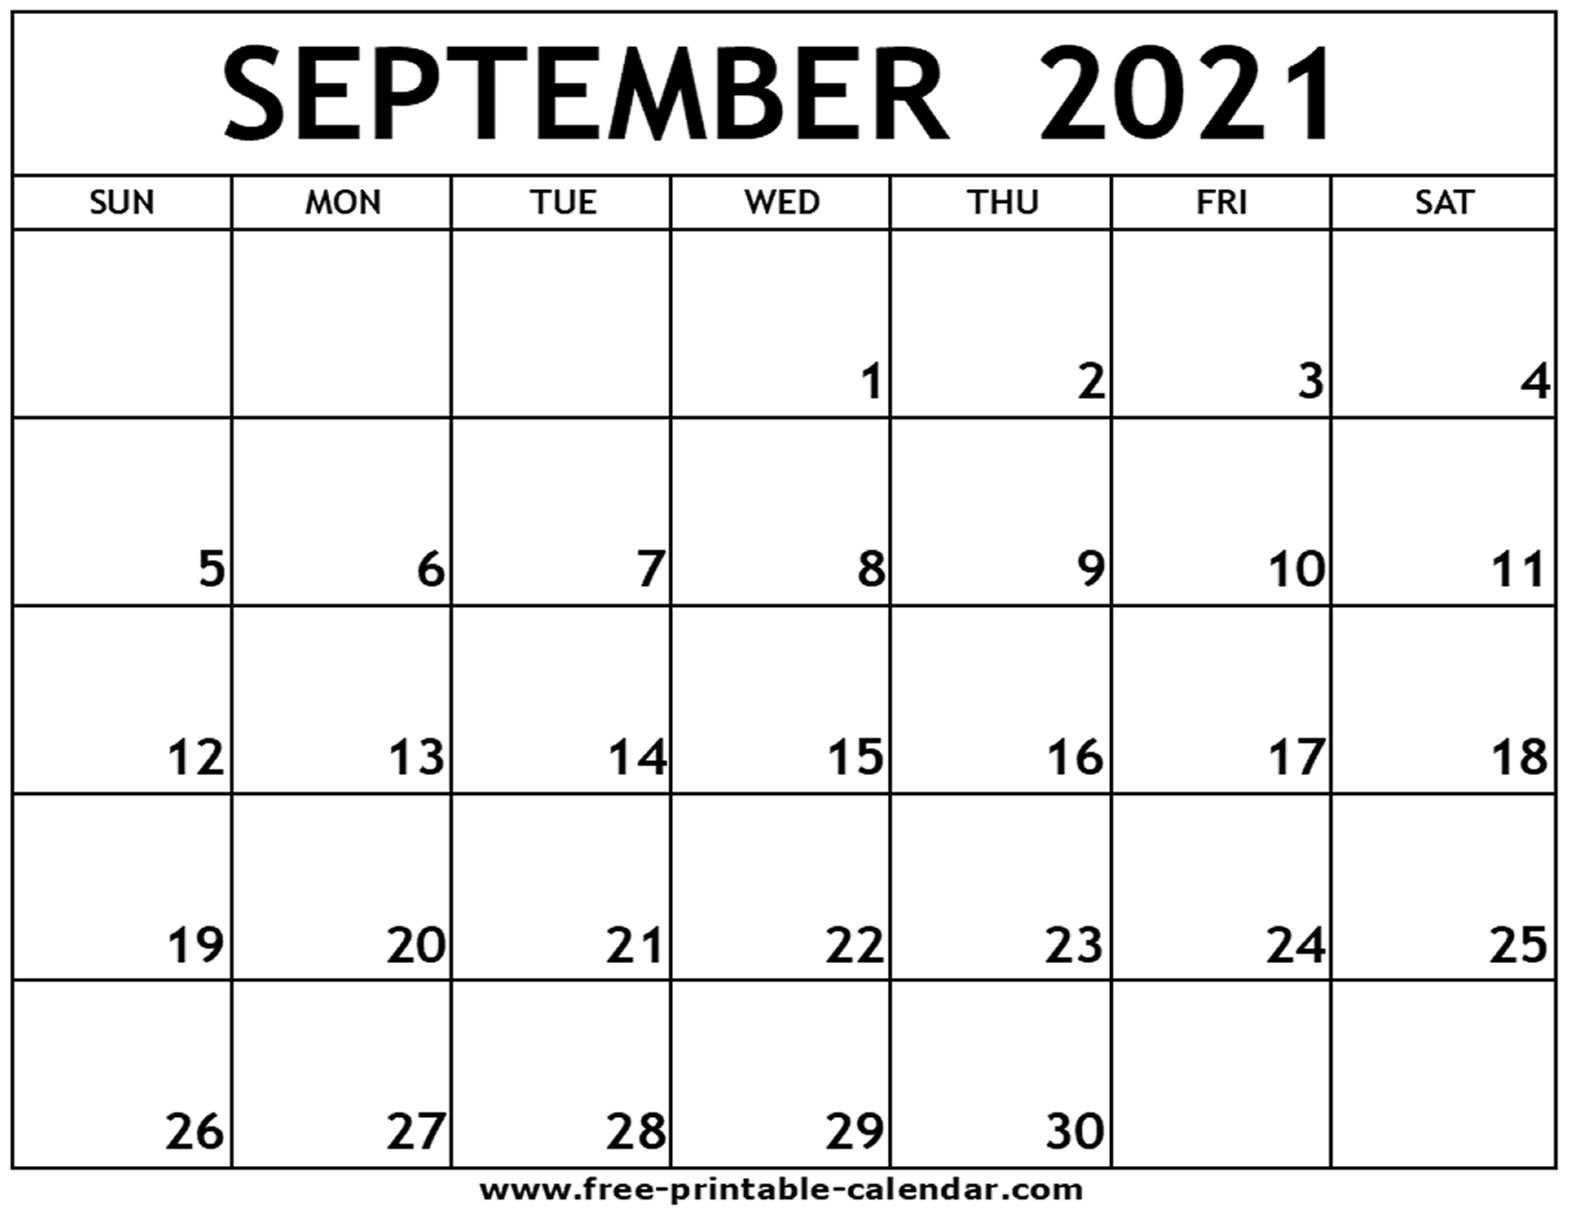 Catch Free Printable Calendar 2021 September October November